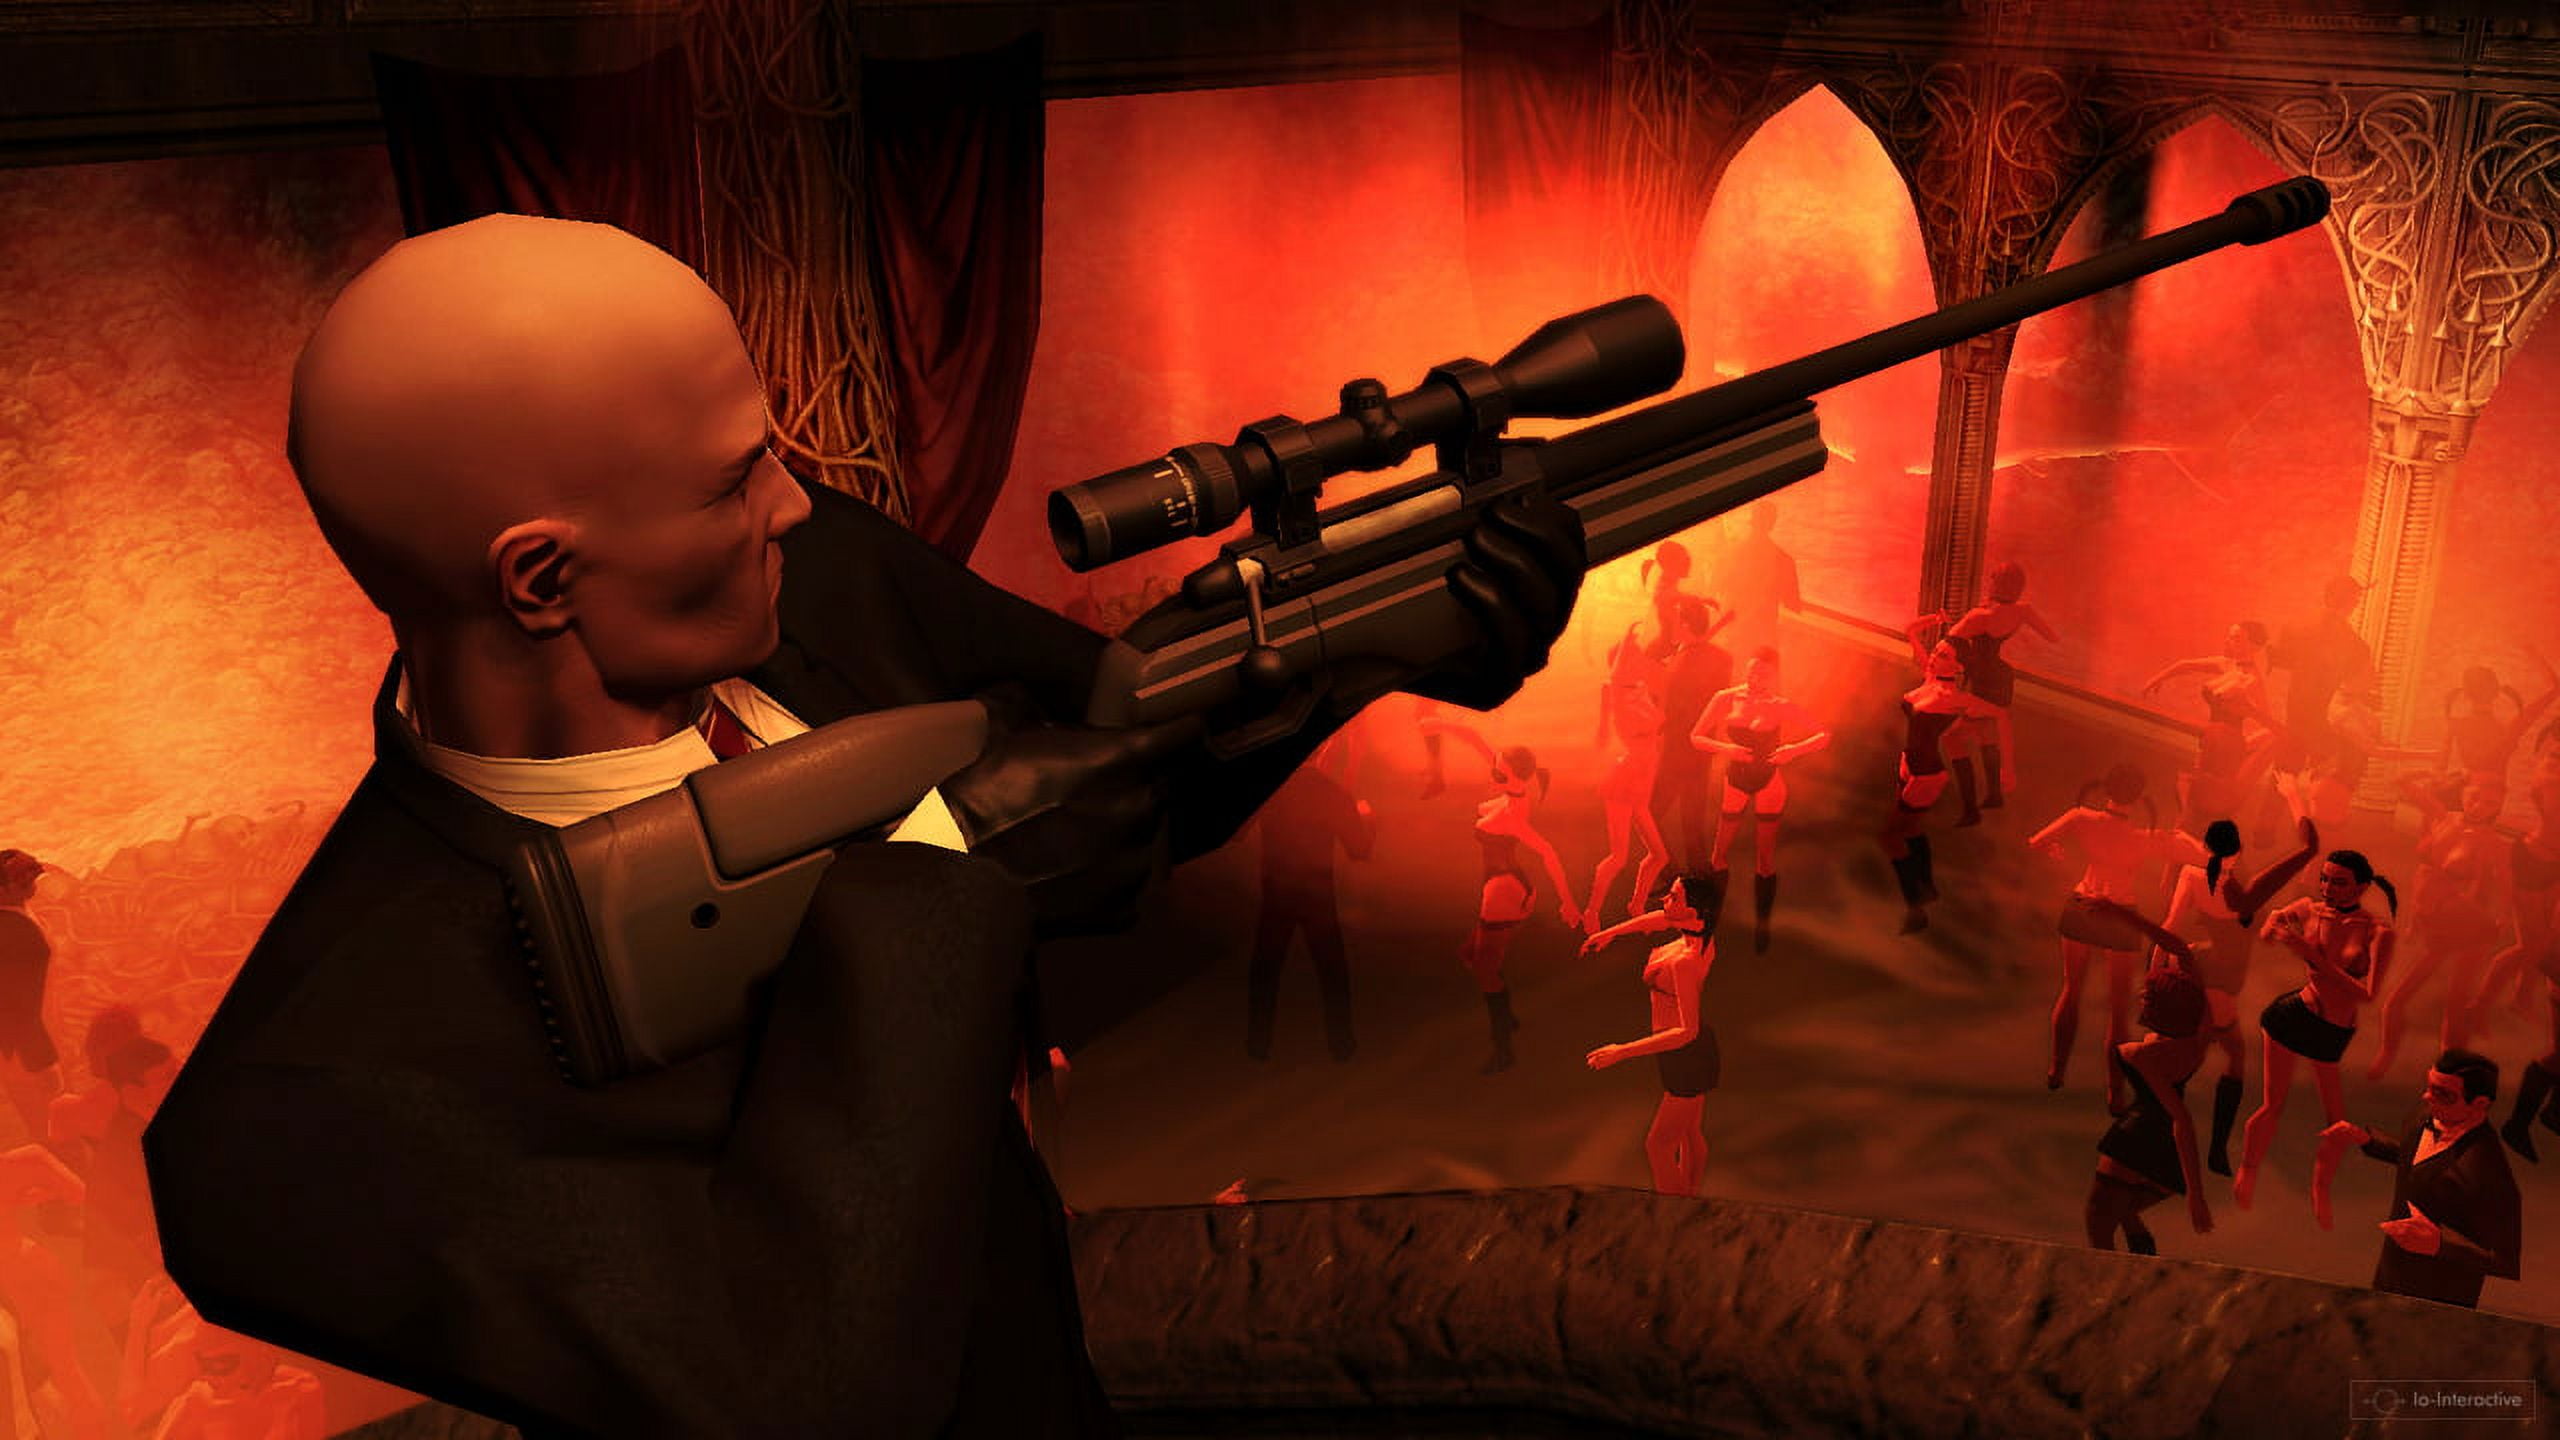 Kerosene Games: Hitman: Blood Money (Xbox 360)